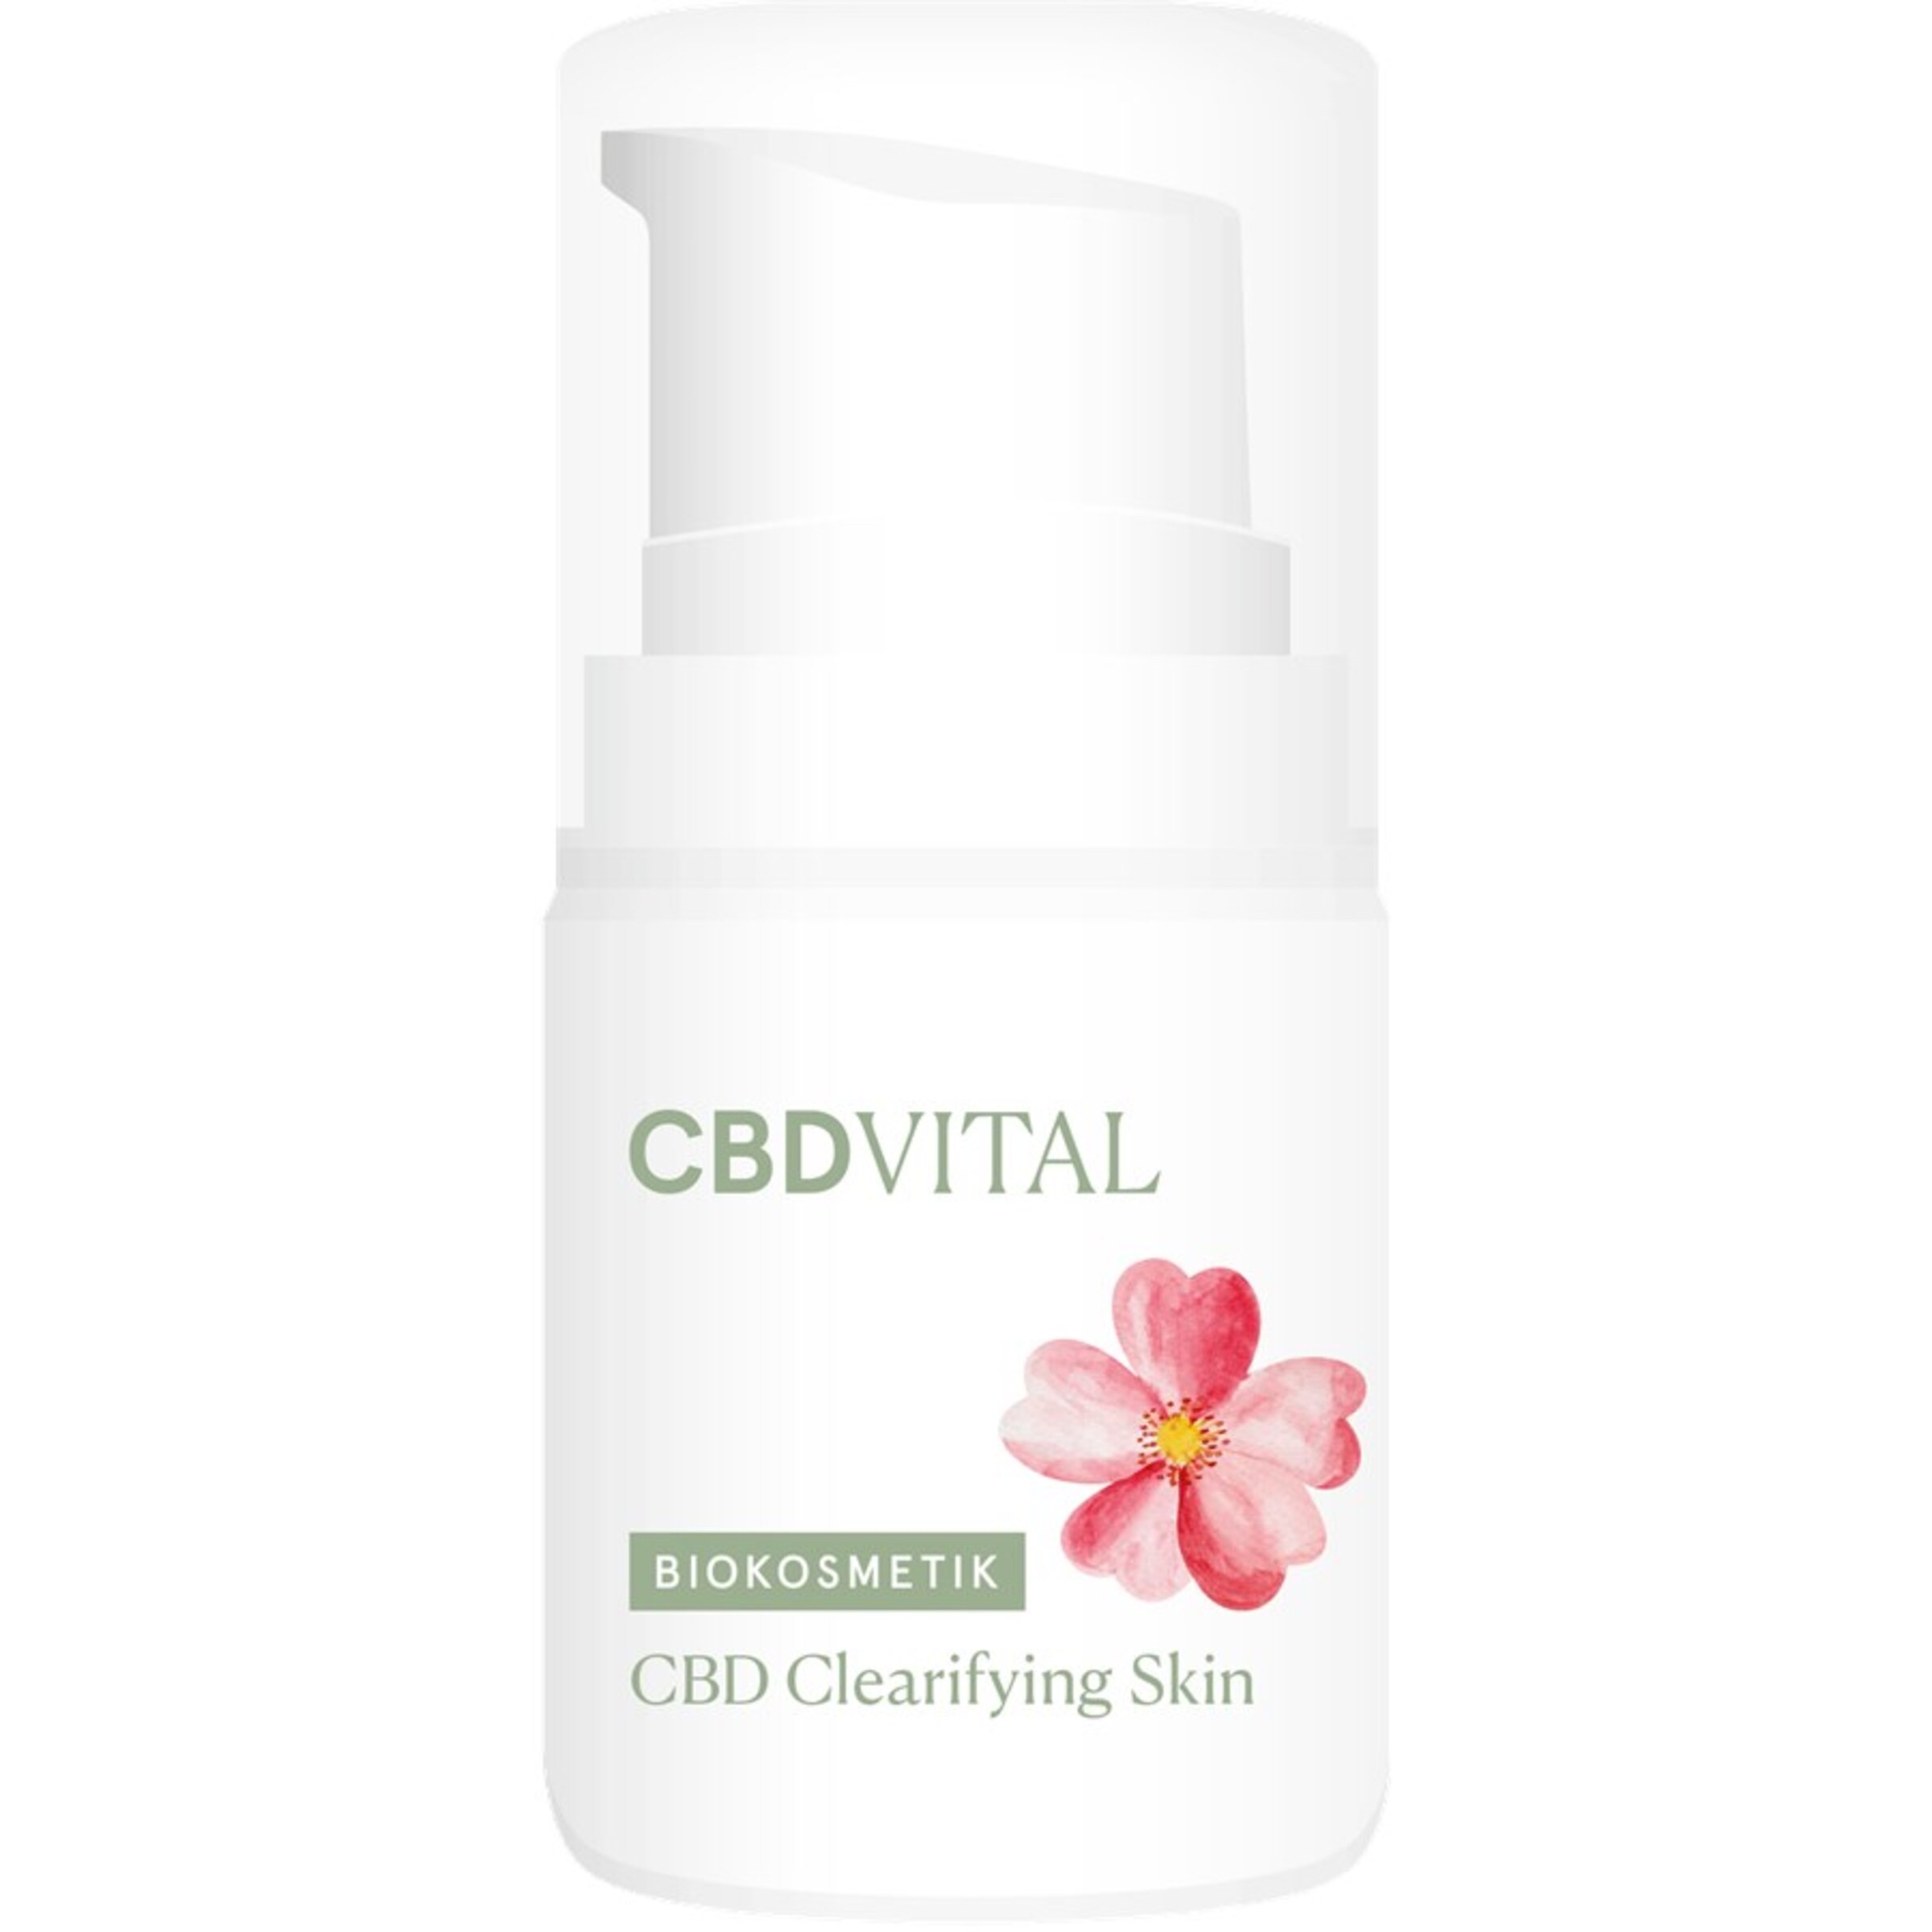 CBDVITAL Gesichtspflege CBD Clearifying Skin in 